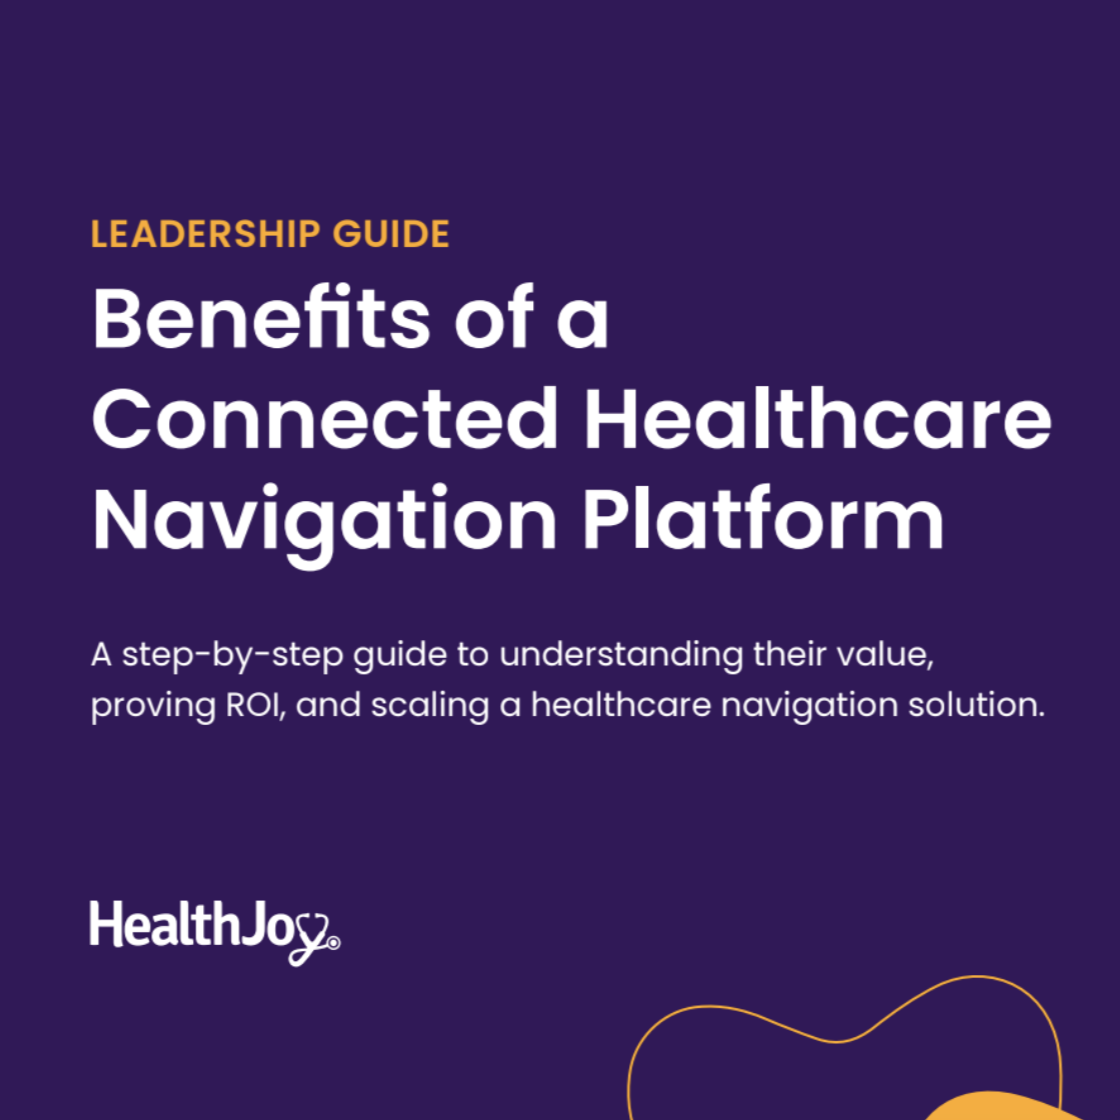 The Benefits of a Connected Healthcare Navigation Platform